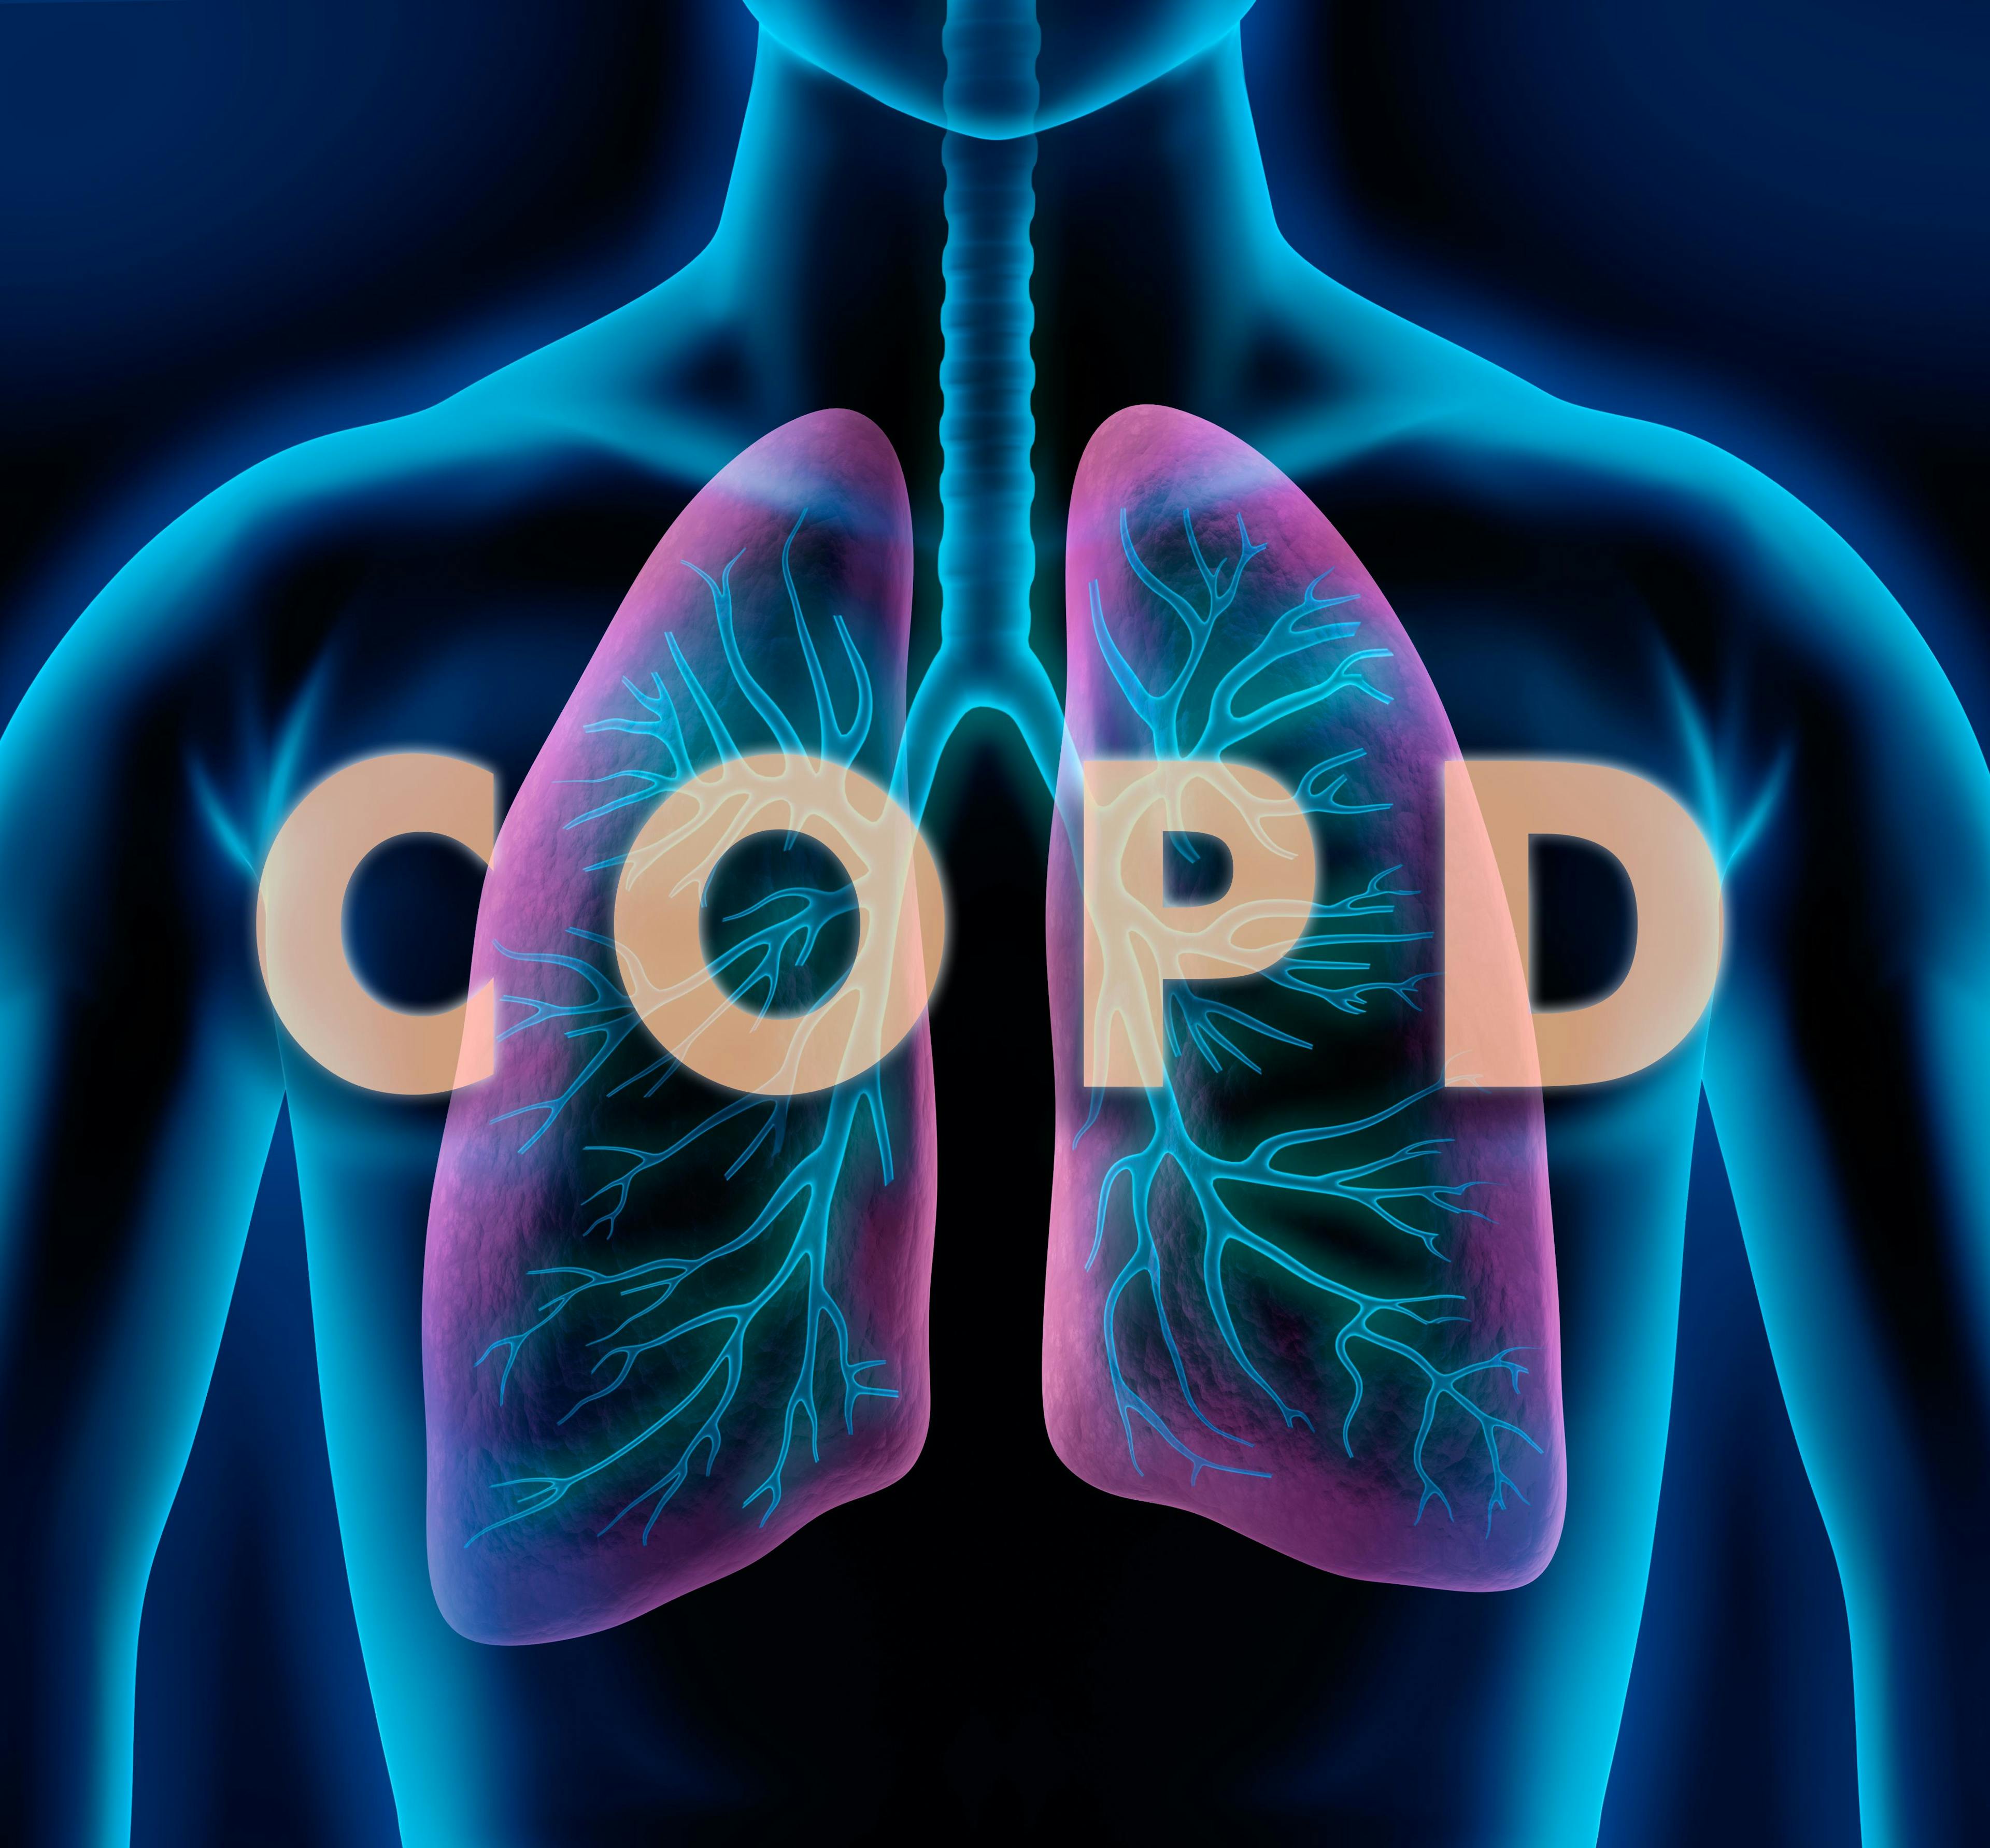 COPD animation | Image Credit: peterschreiber.media - stock.adobe.com